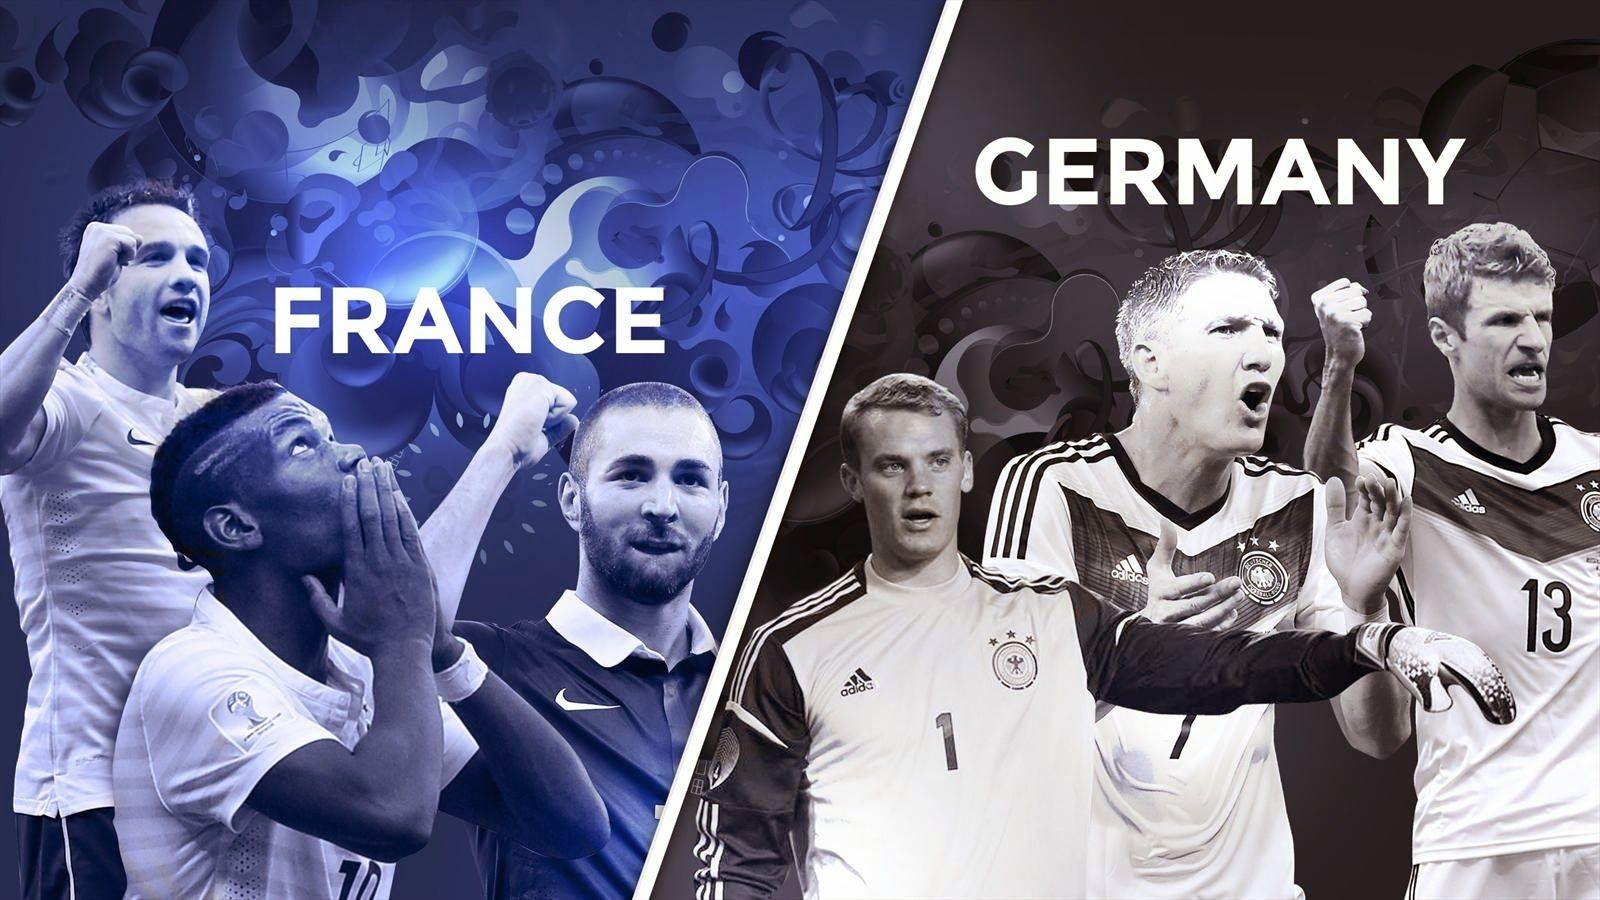 France vs #Germany #wallpaper. Fifa World Cup 2014 Brazil